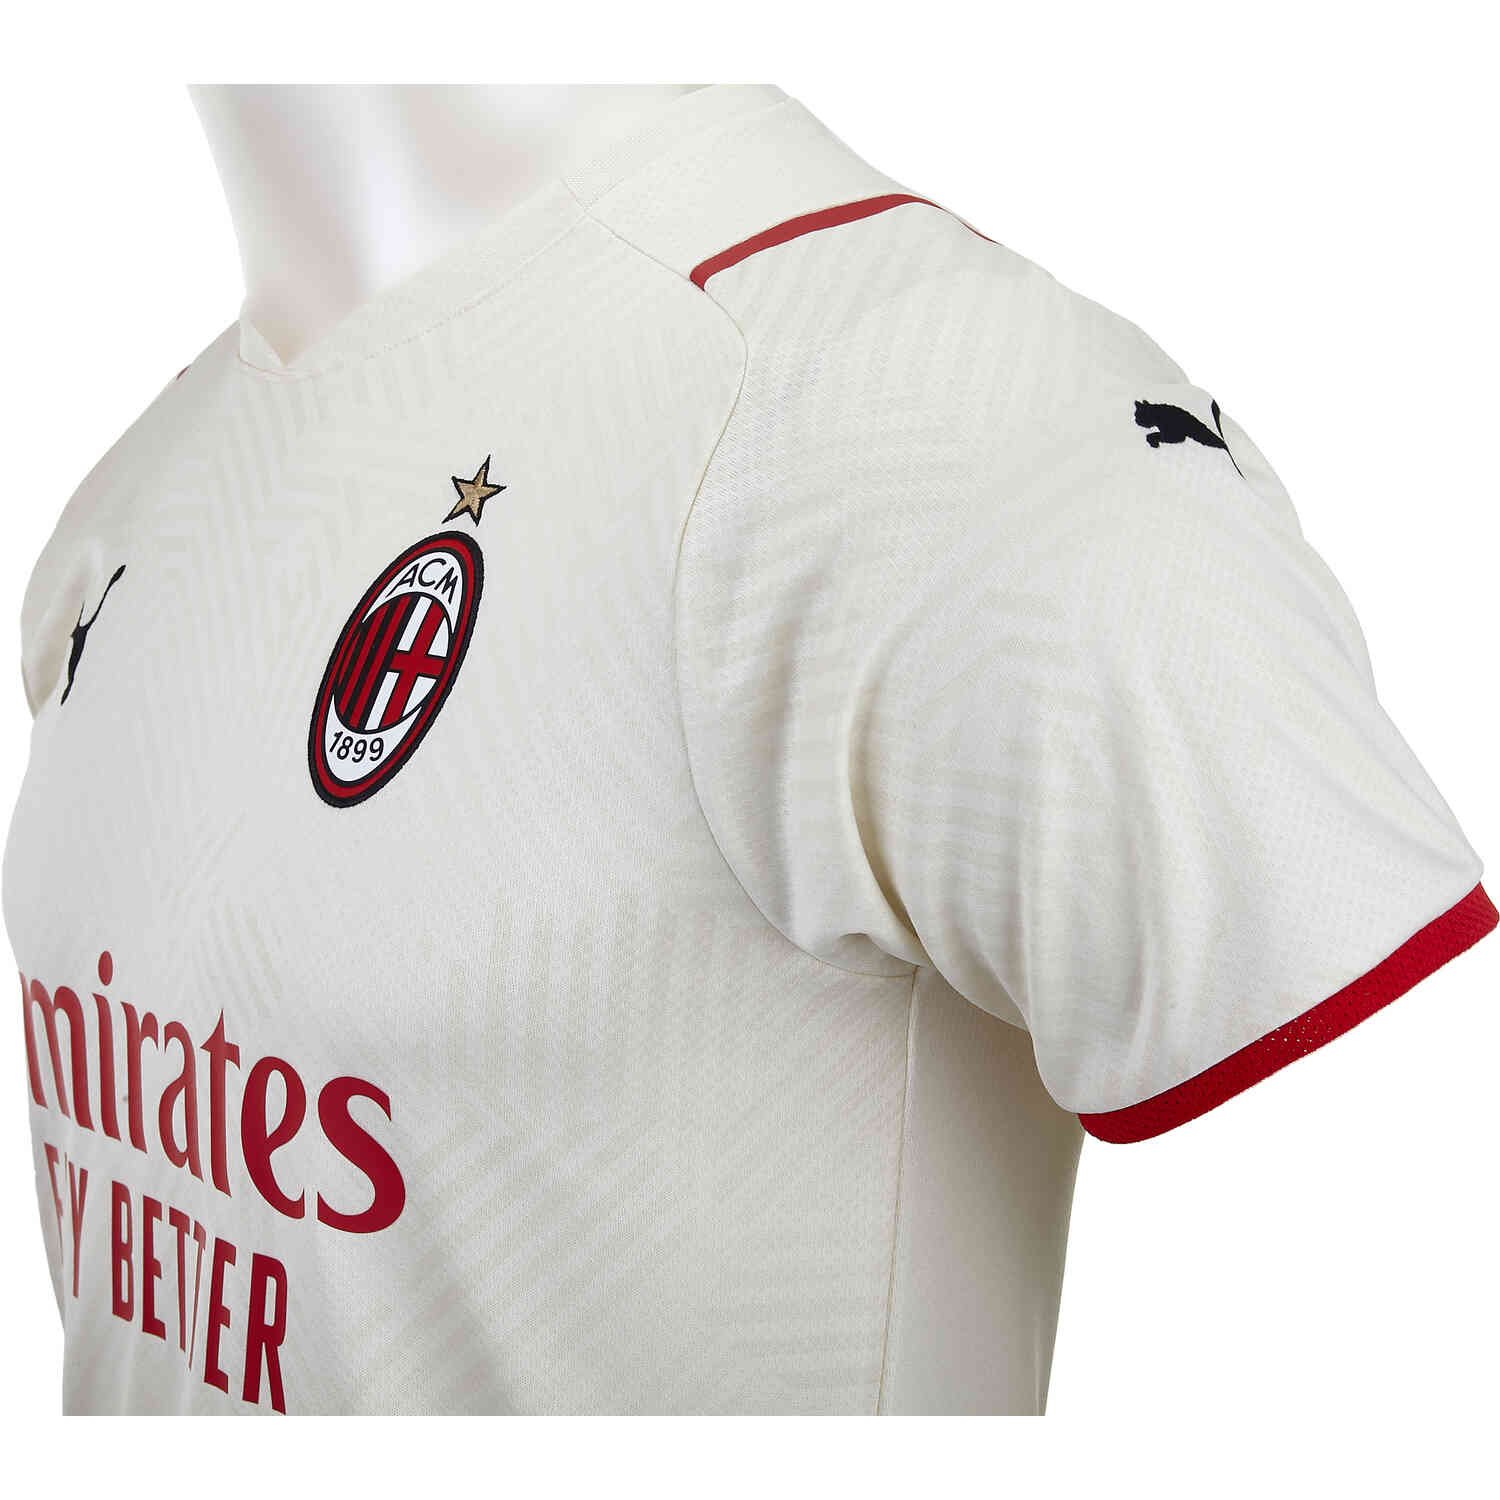 The new AC Milan 2021-22 away kit by PUMA